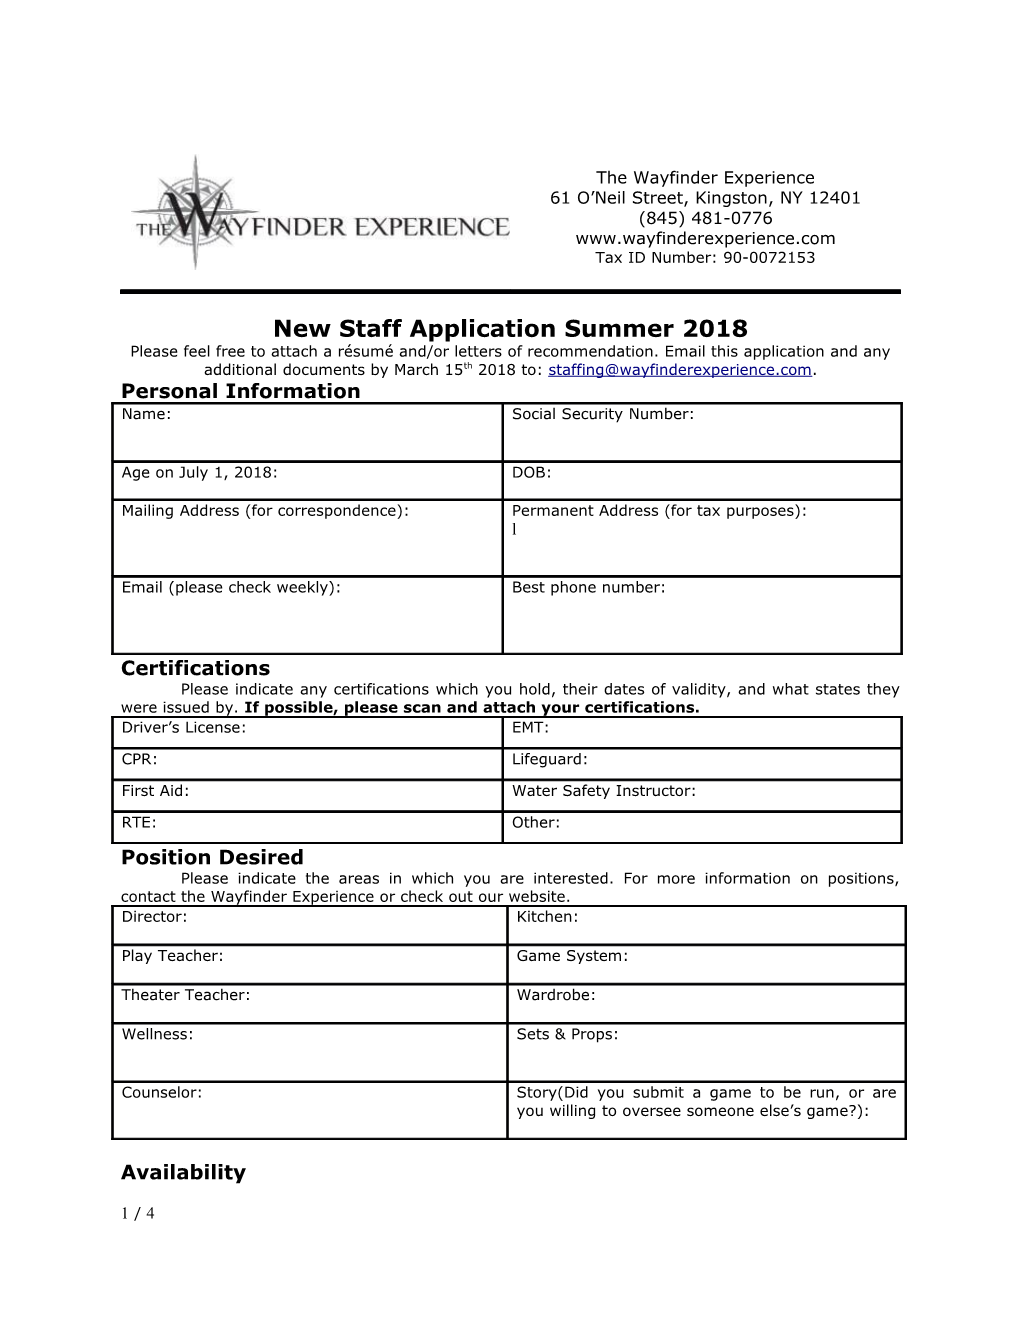 New Staff Application Summer 2018